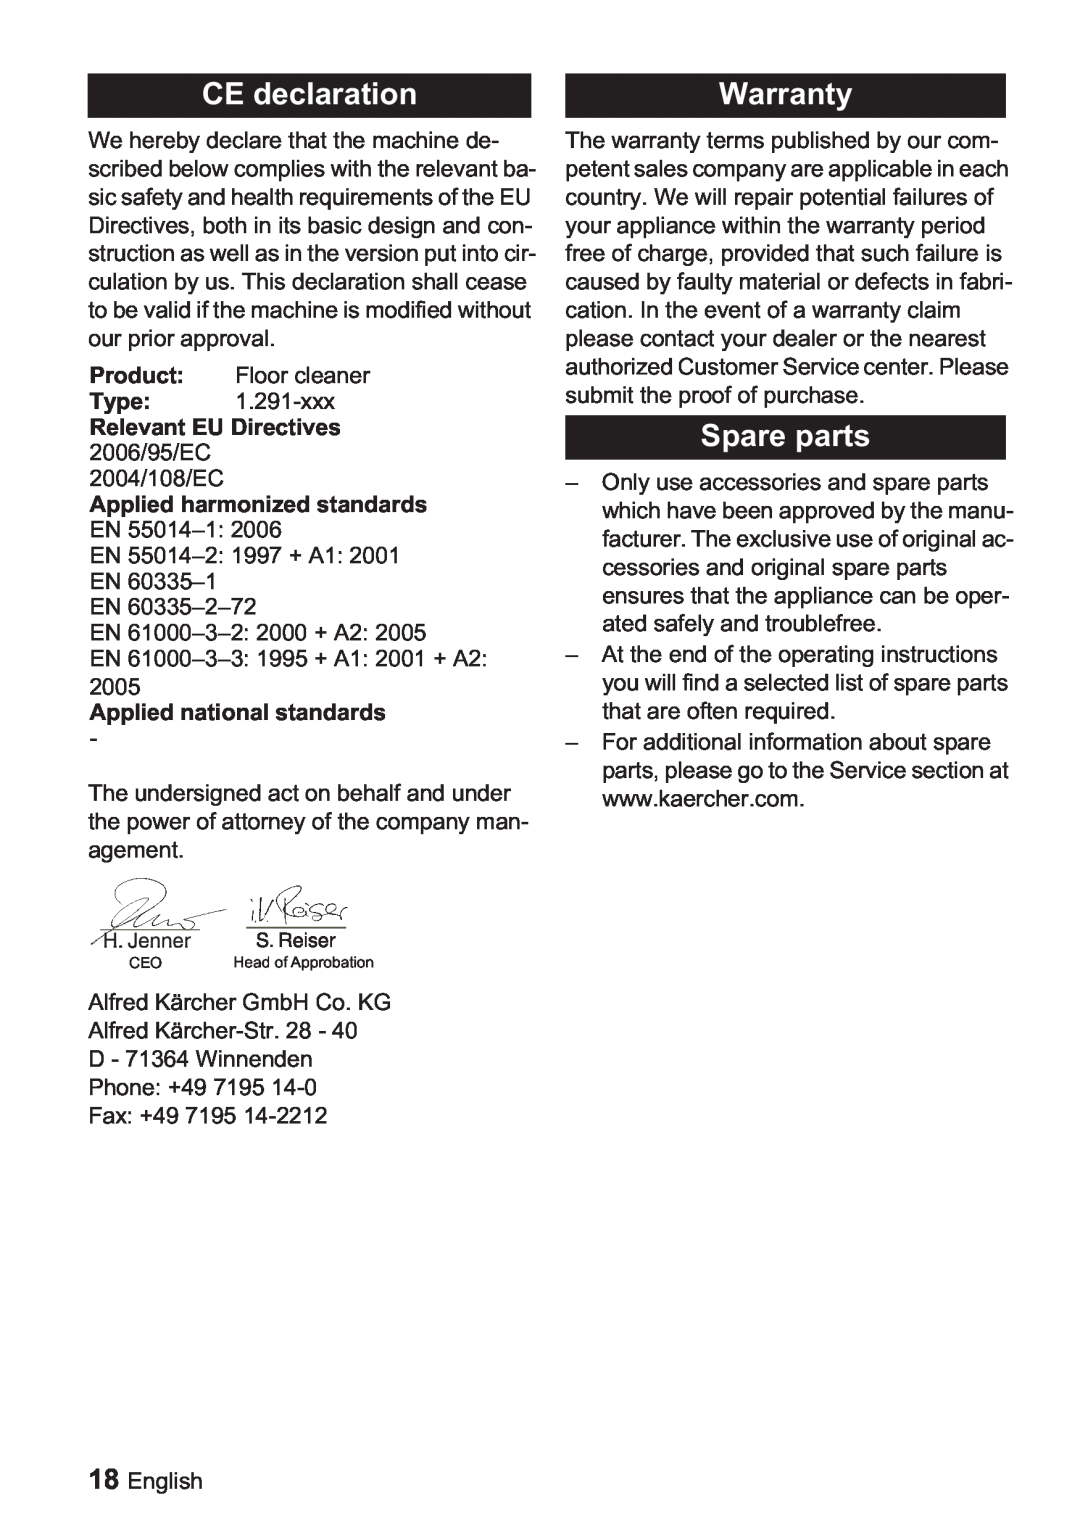 Karcher BDP 1500, BDP 50 manual CE declaration, Warranty, Spare parts, Relevant EU Directives 2006/95/EC 2004/108/EC 